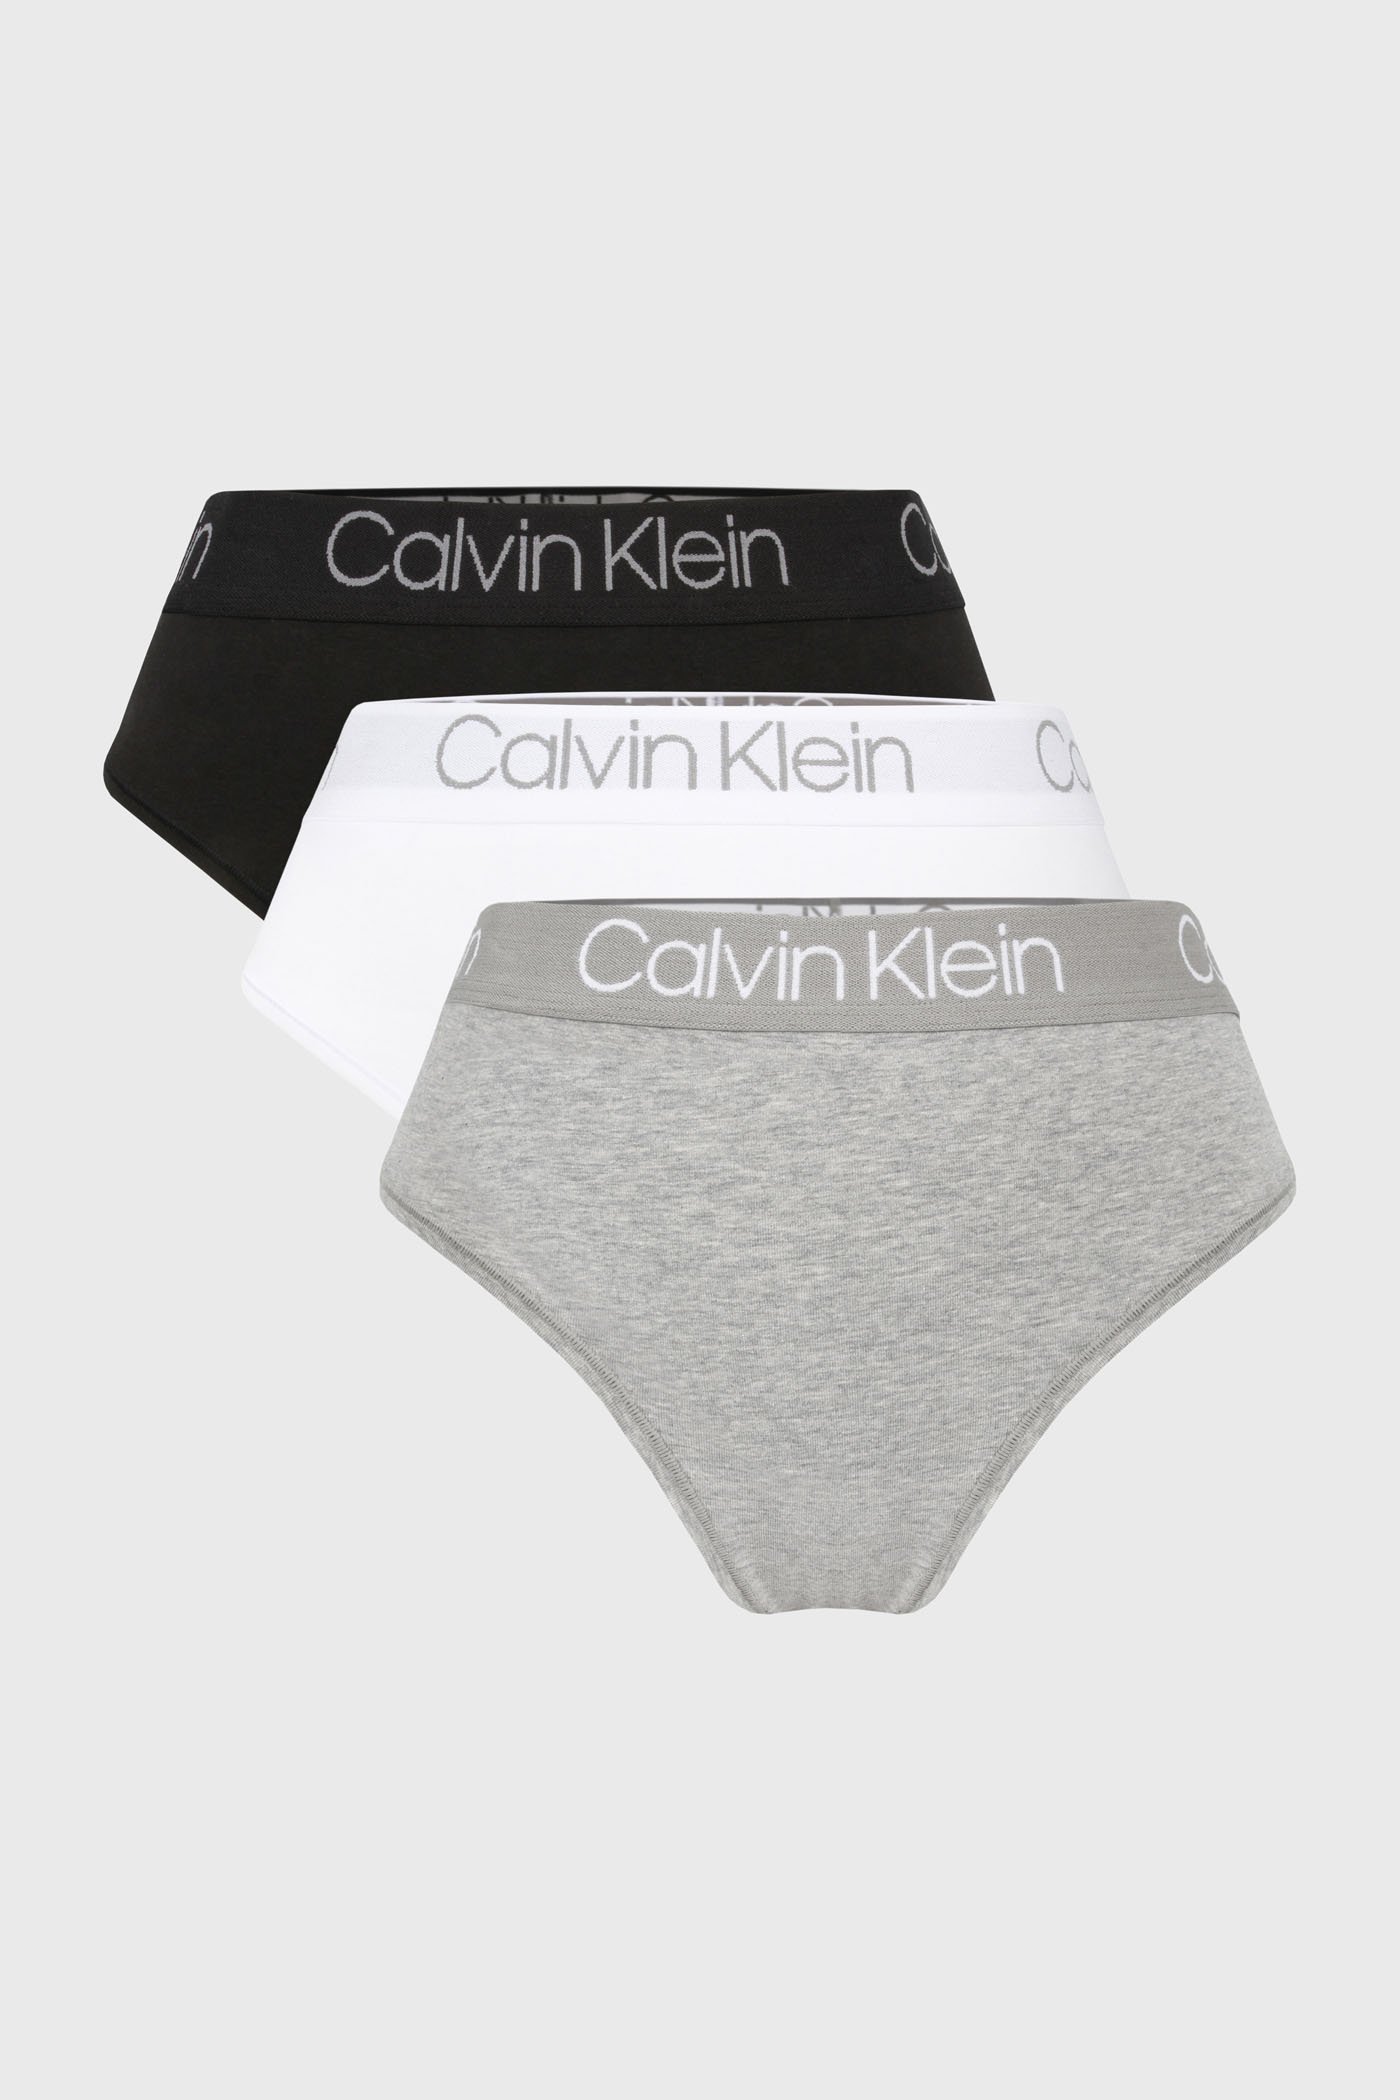 3 PACK Chilot tanga cu talie înaltă Calvin Klein Body Cotton | Astratex.ro